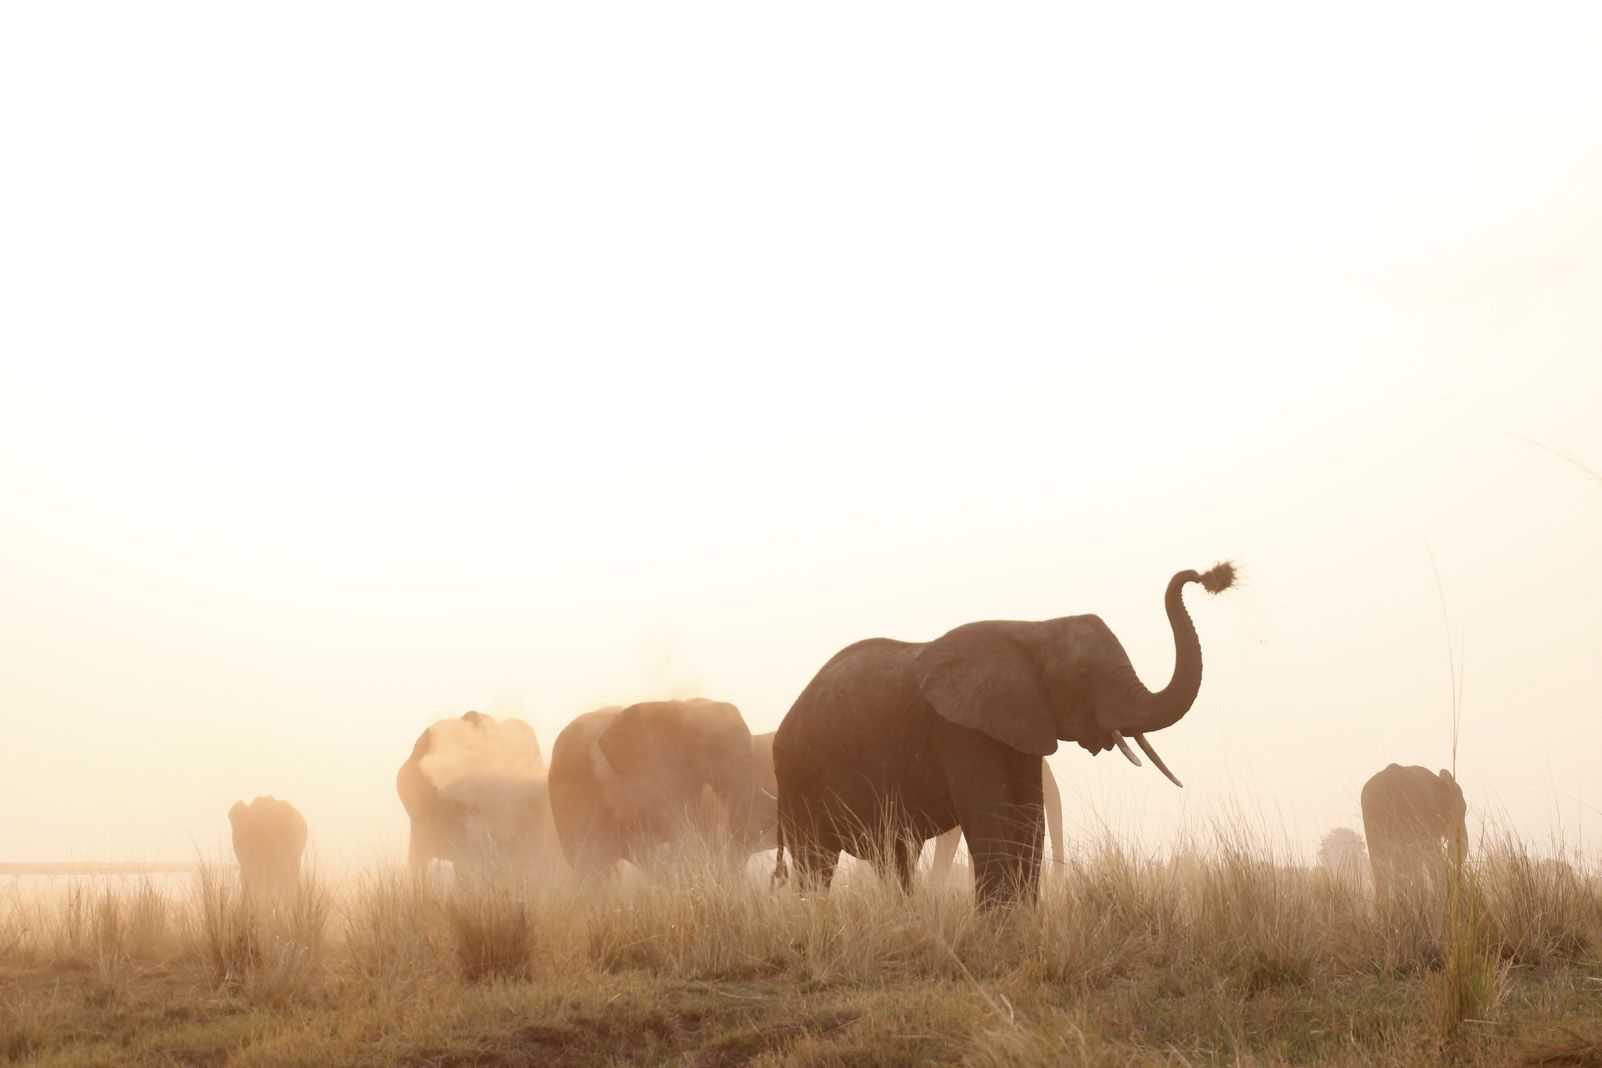 mireia clua   Elephants in the dust   Etosha NP Namibia